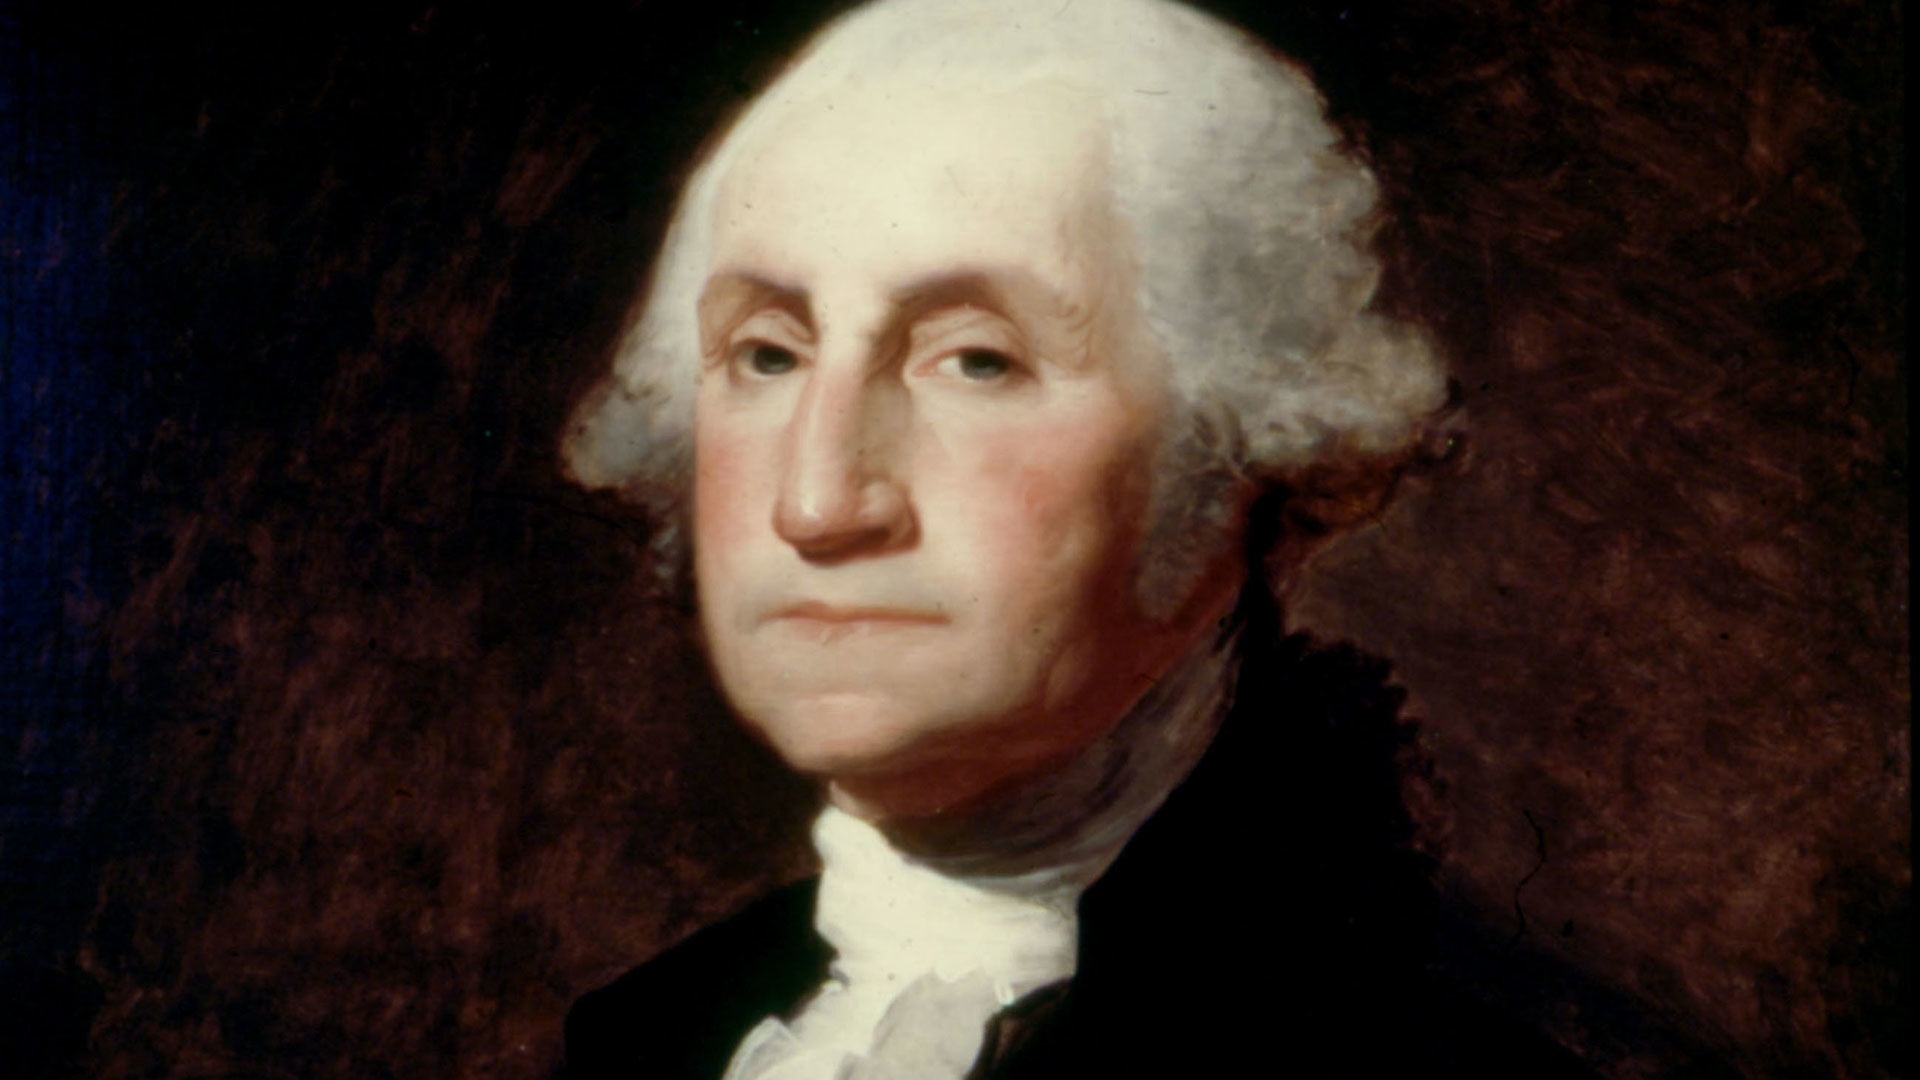 Topic: George Washington's Life and Legacy